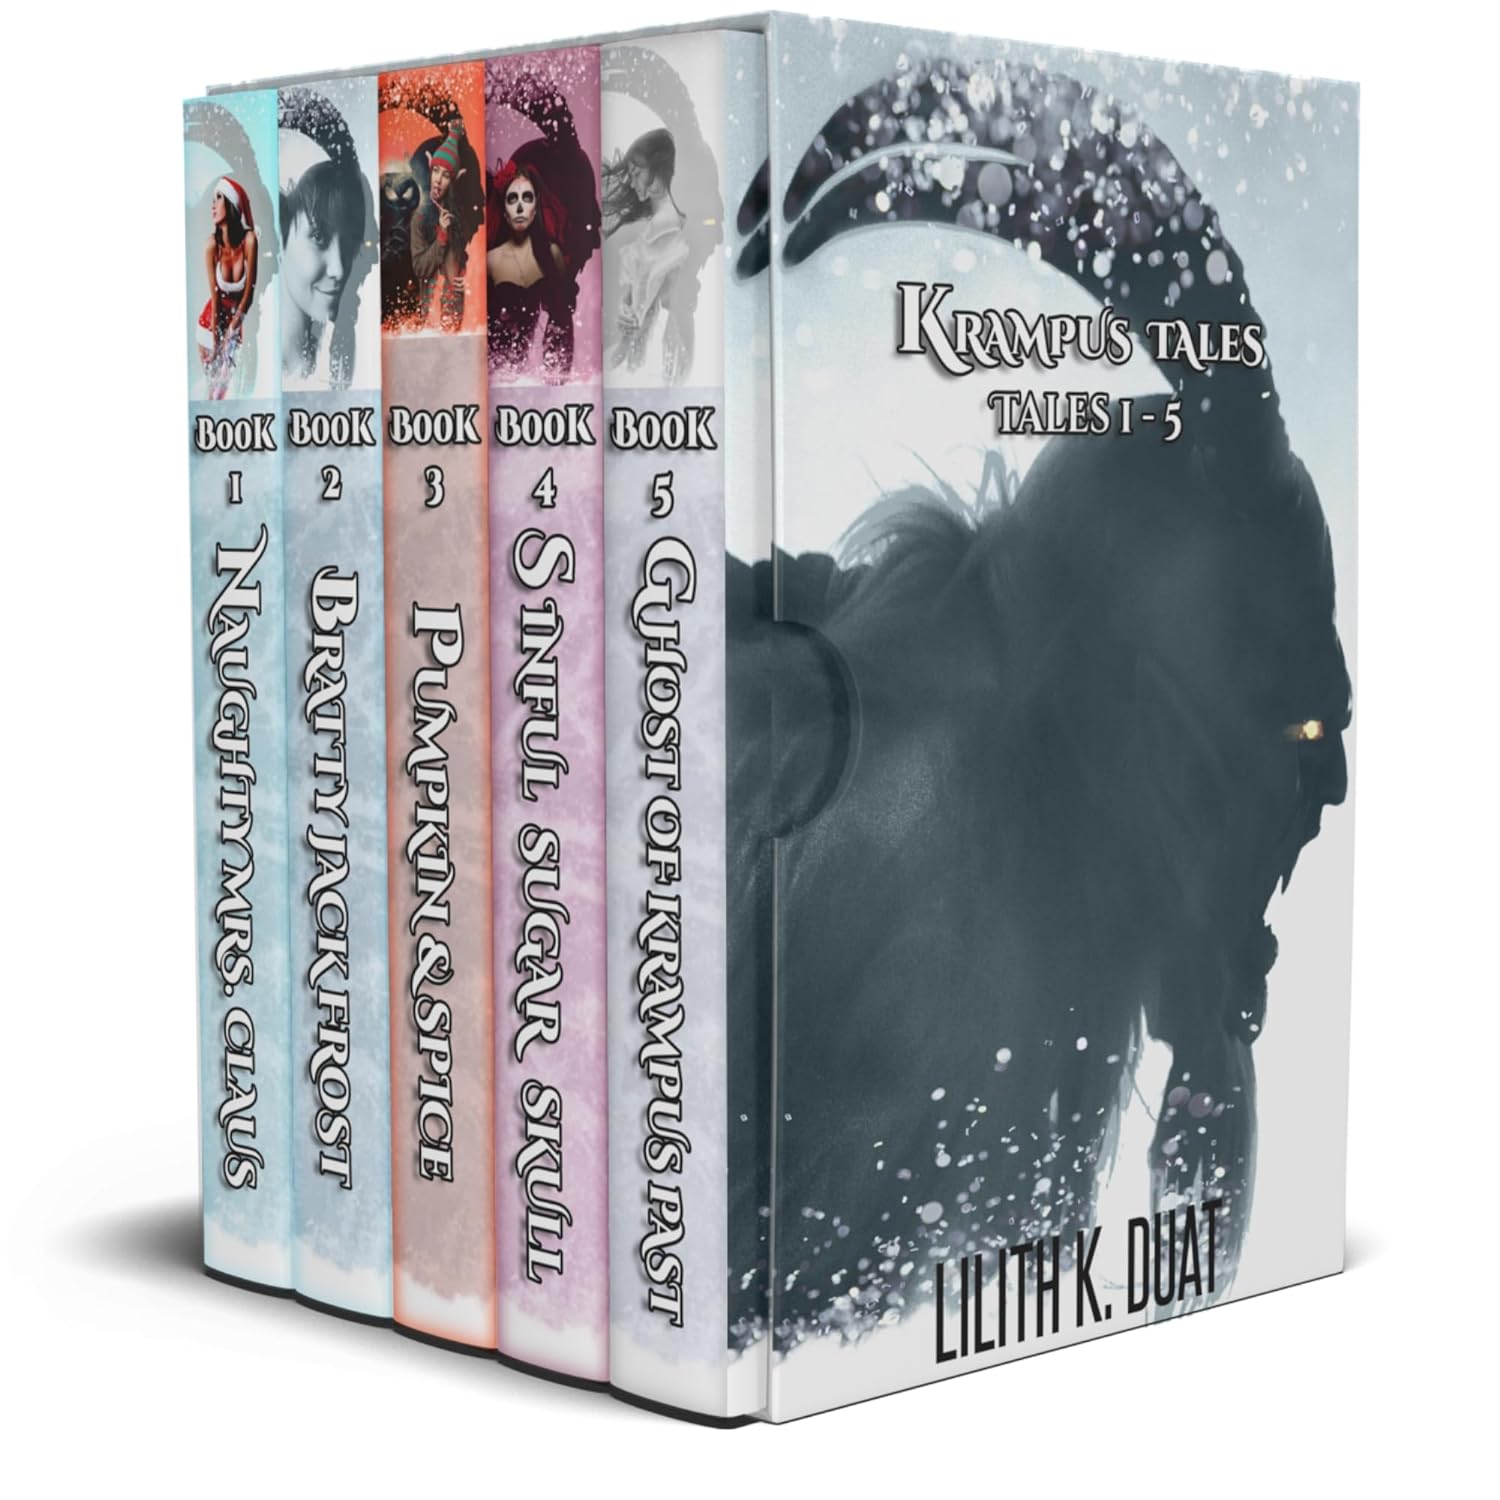 Krampus Tales Boxset: Vol 1 by Lilith K. Duat